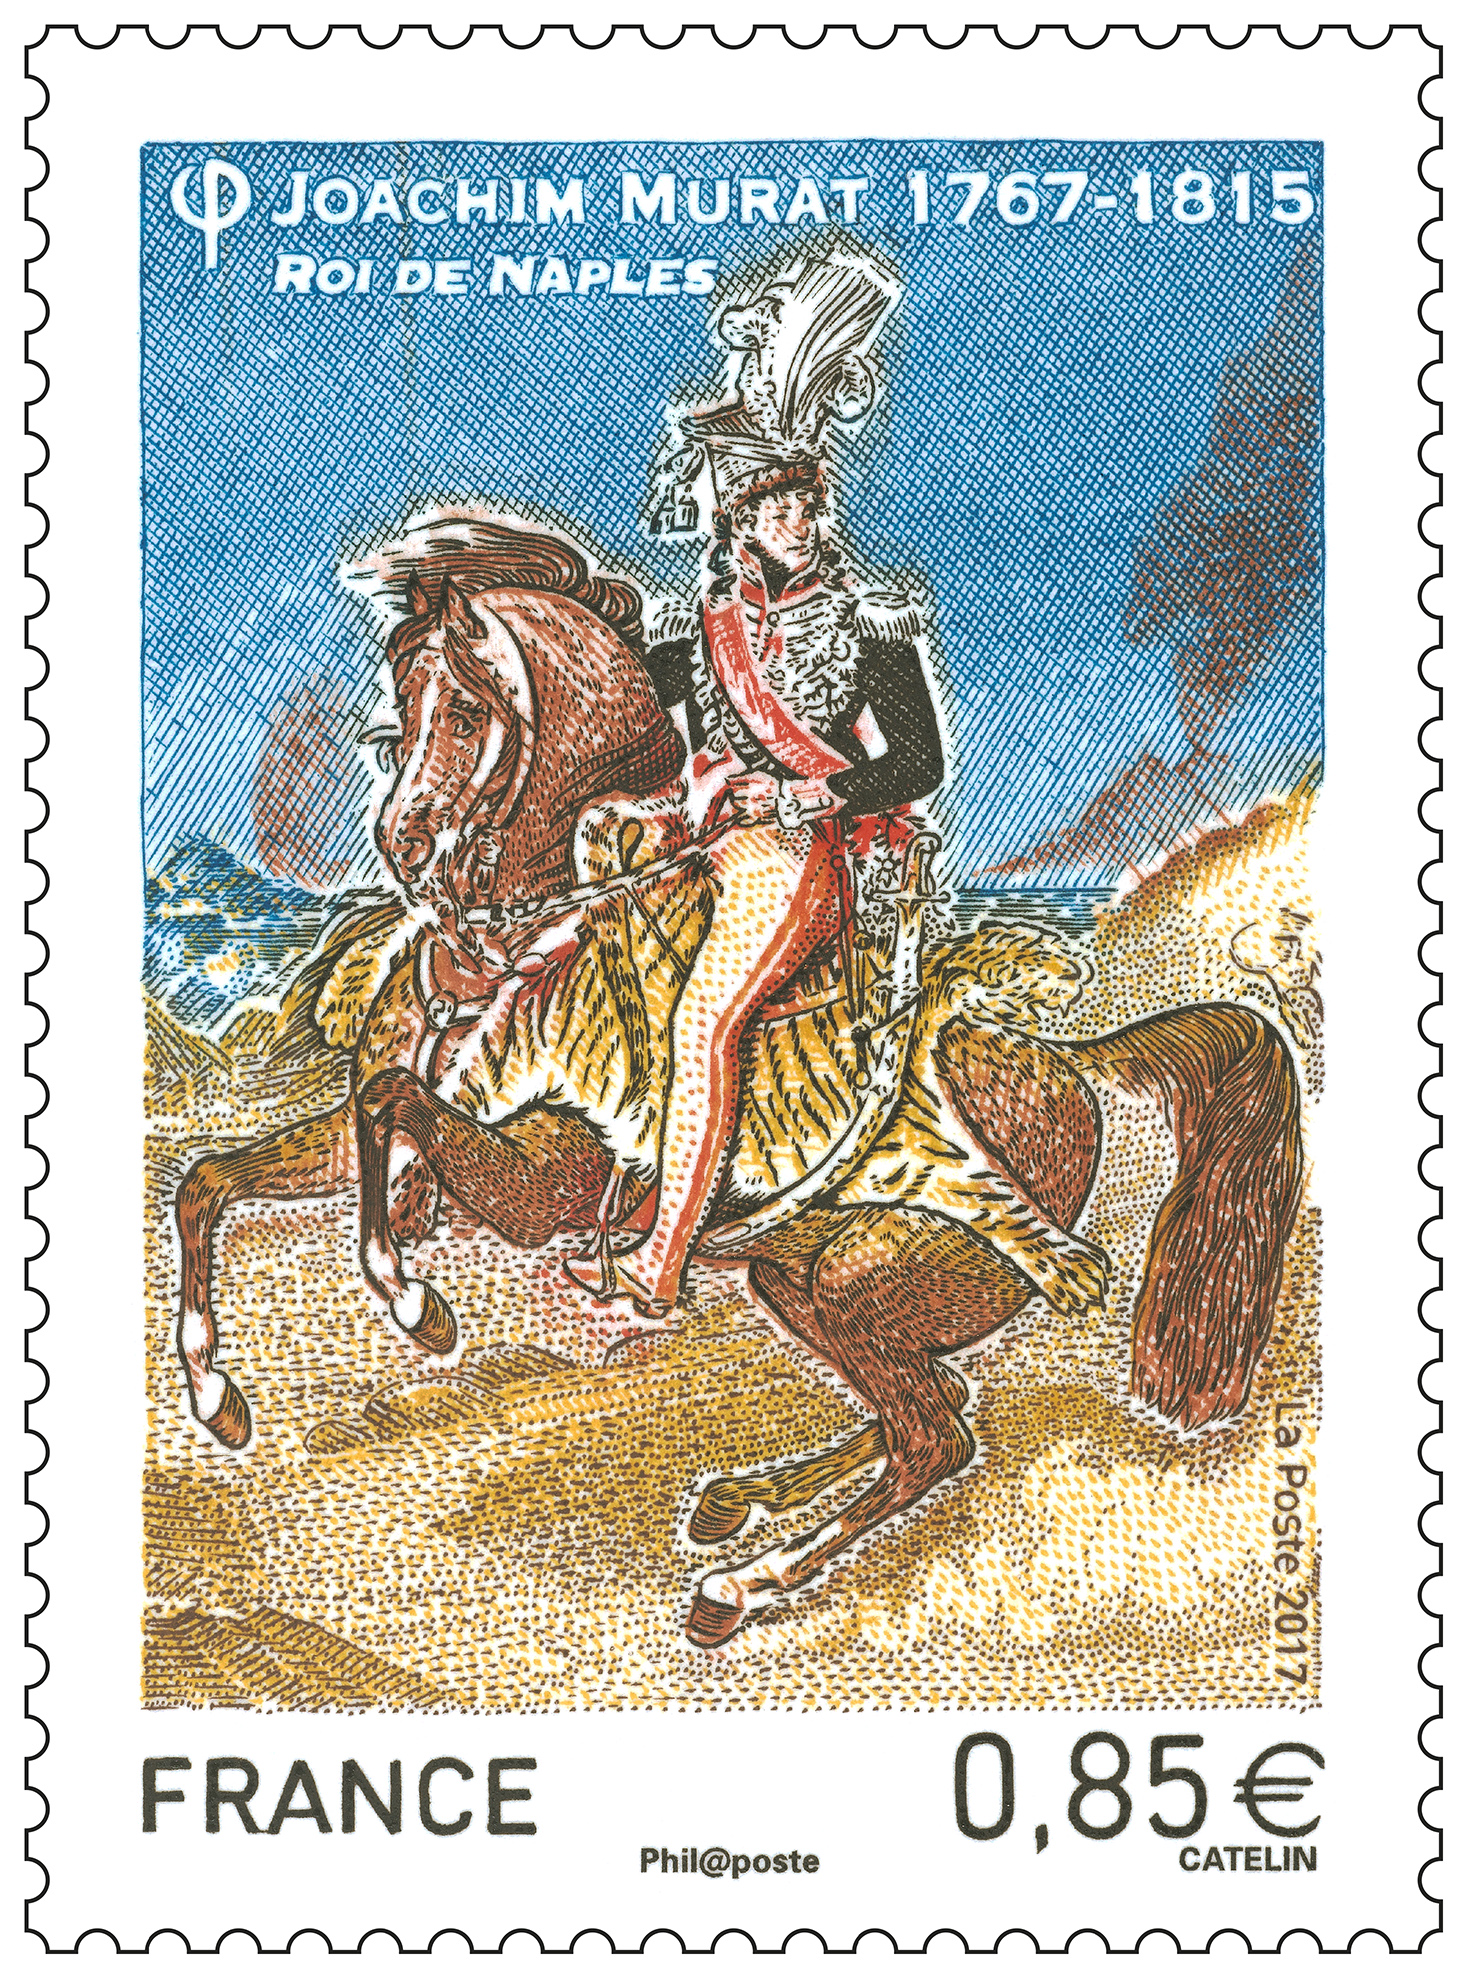 Joachim Murat 1767 - 1815 Roi de Naples